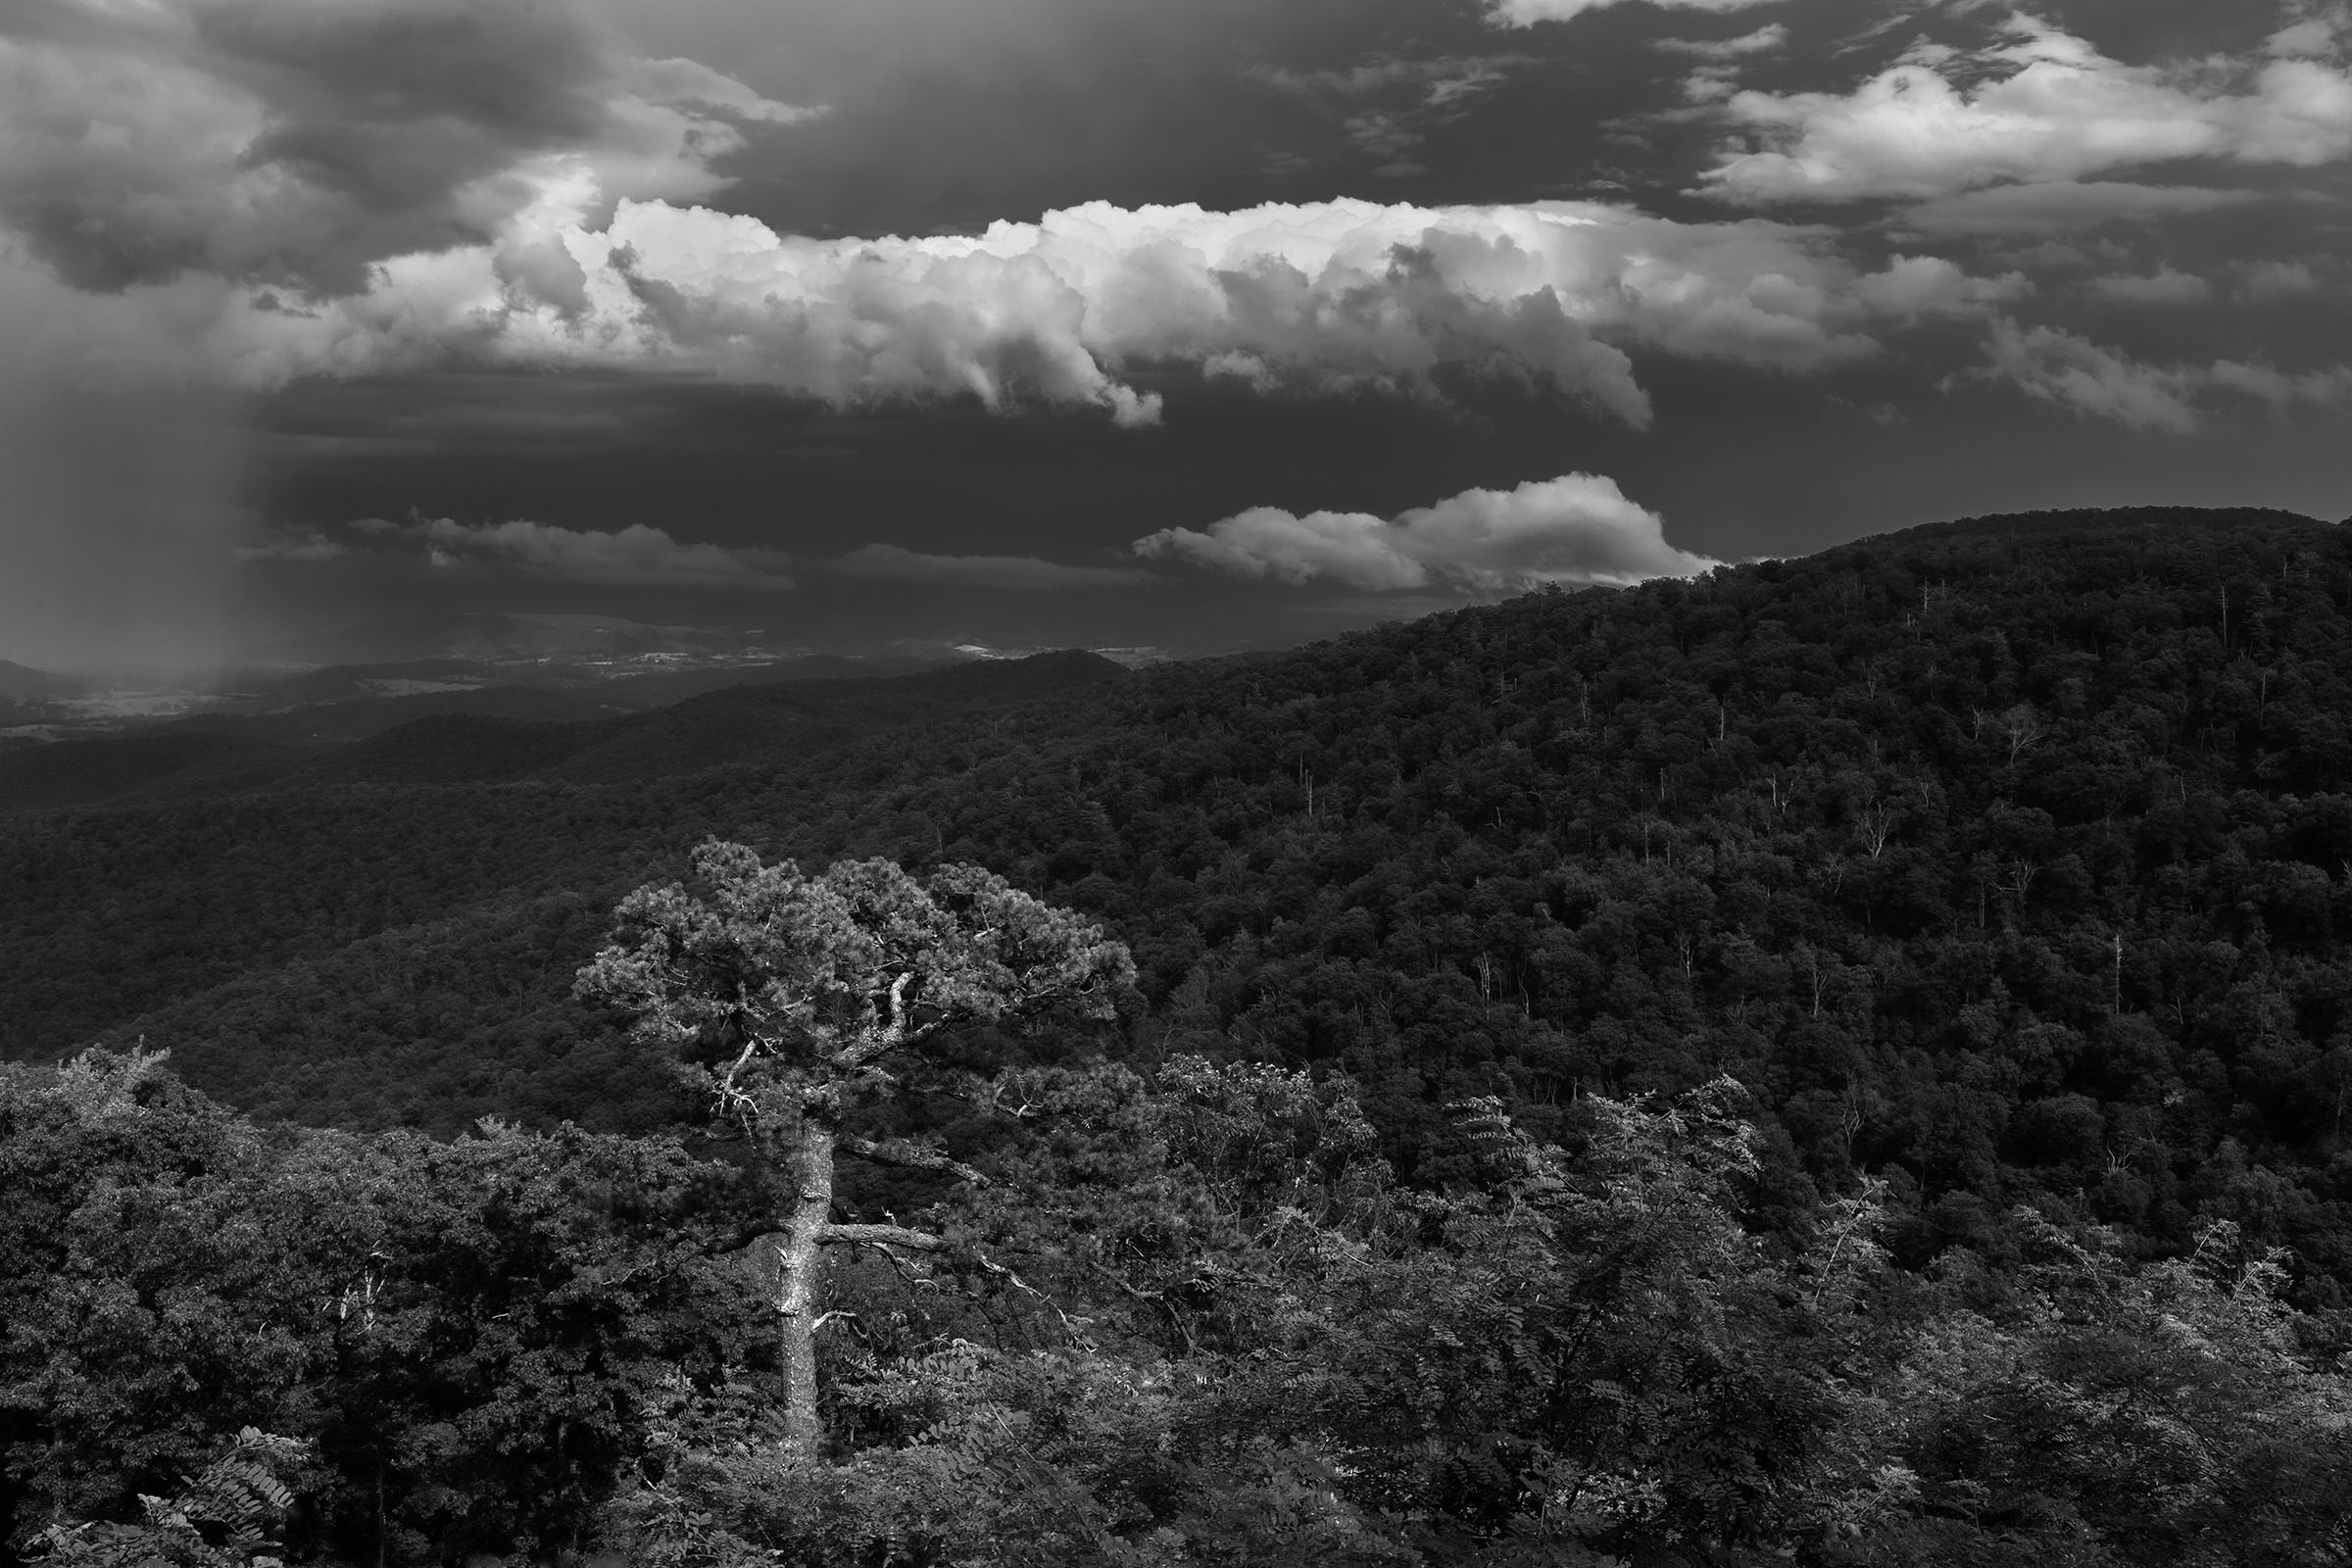 Storm moving through the Shenandoah National Park mountains